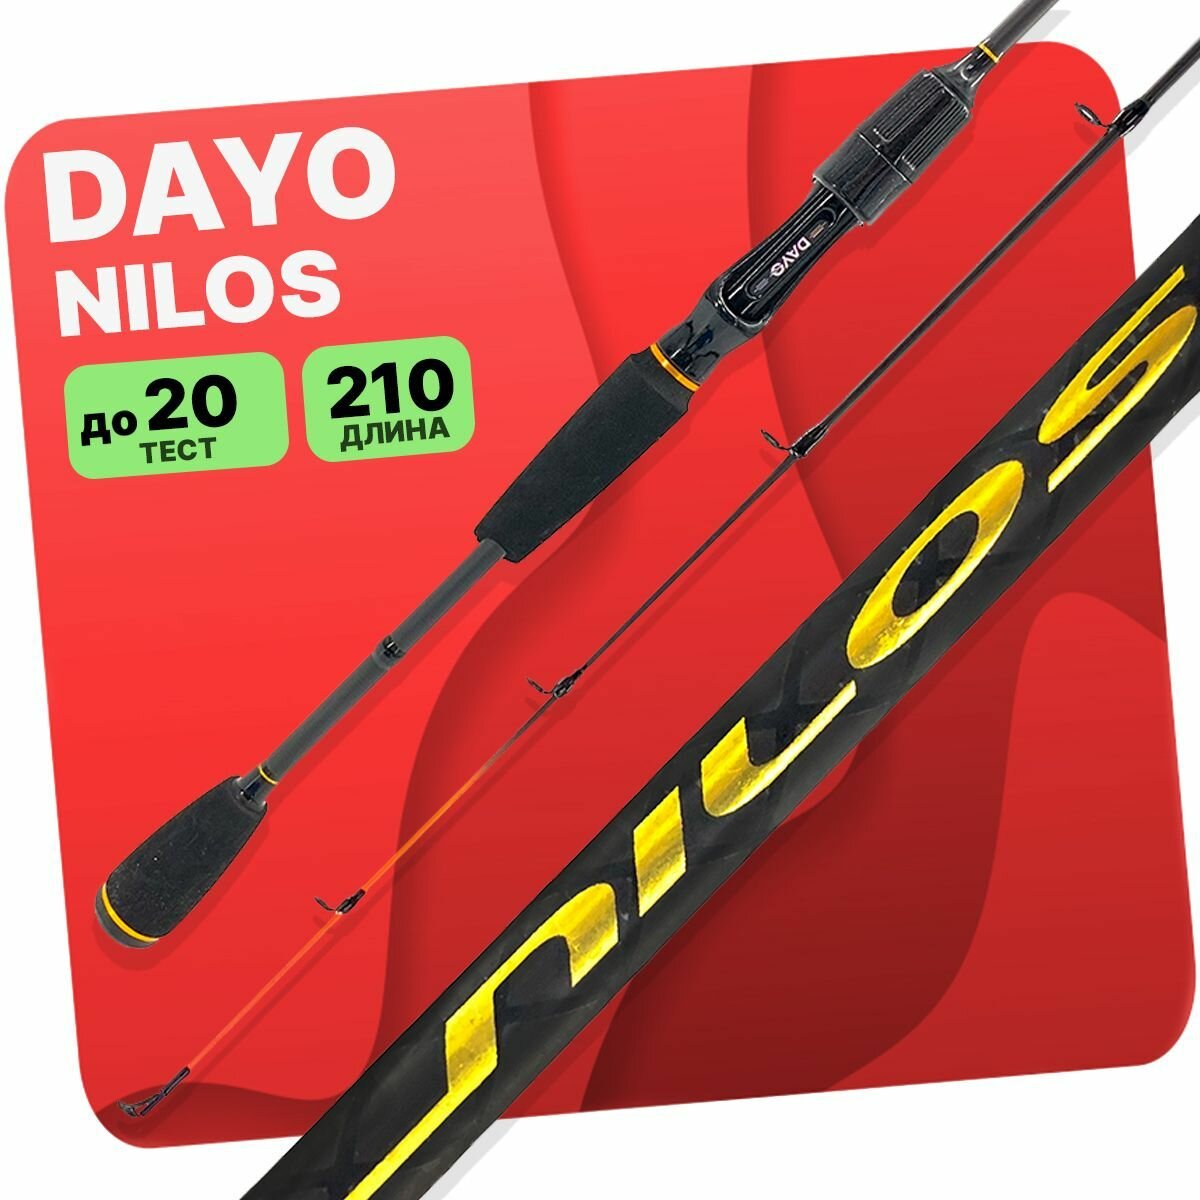 Спиннинг Dayo NILOS 5-20 гр, 210 см